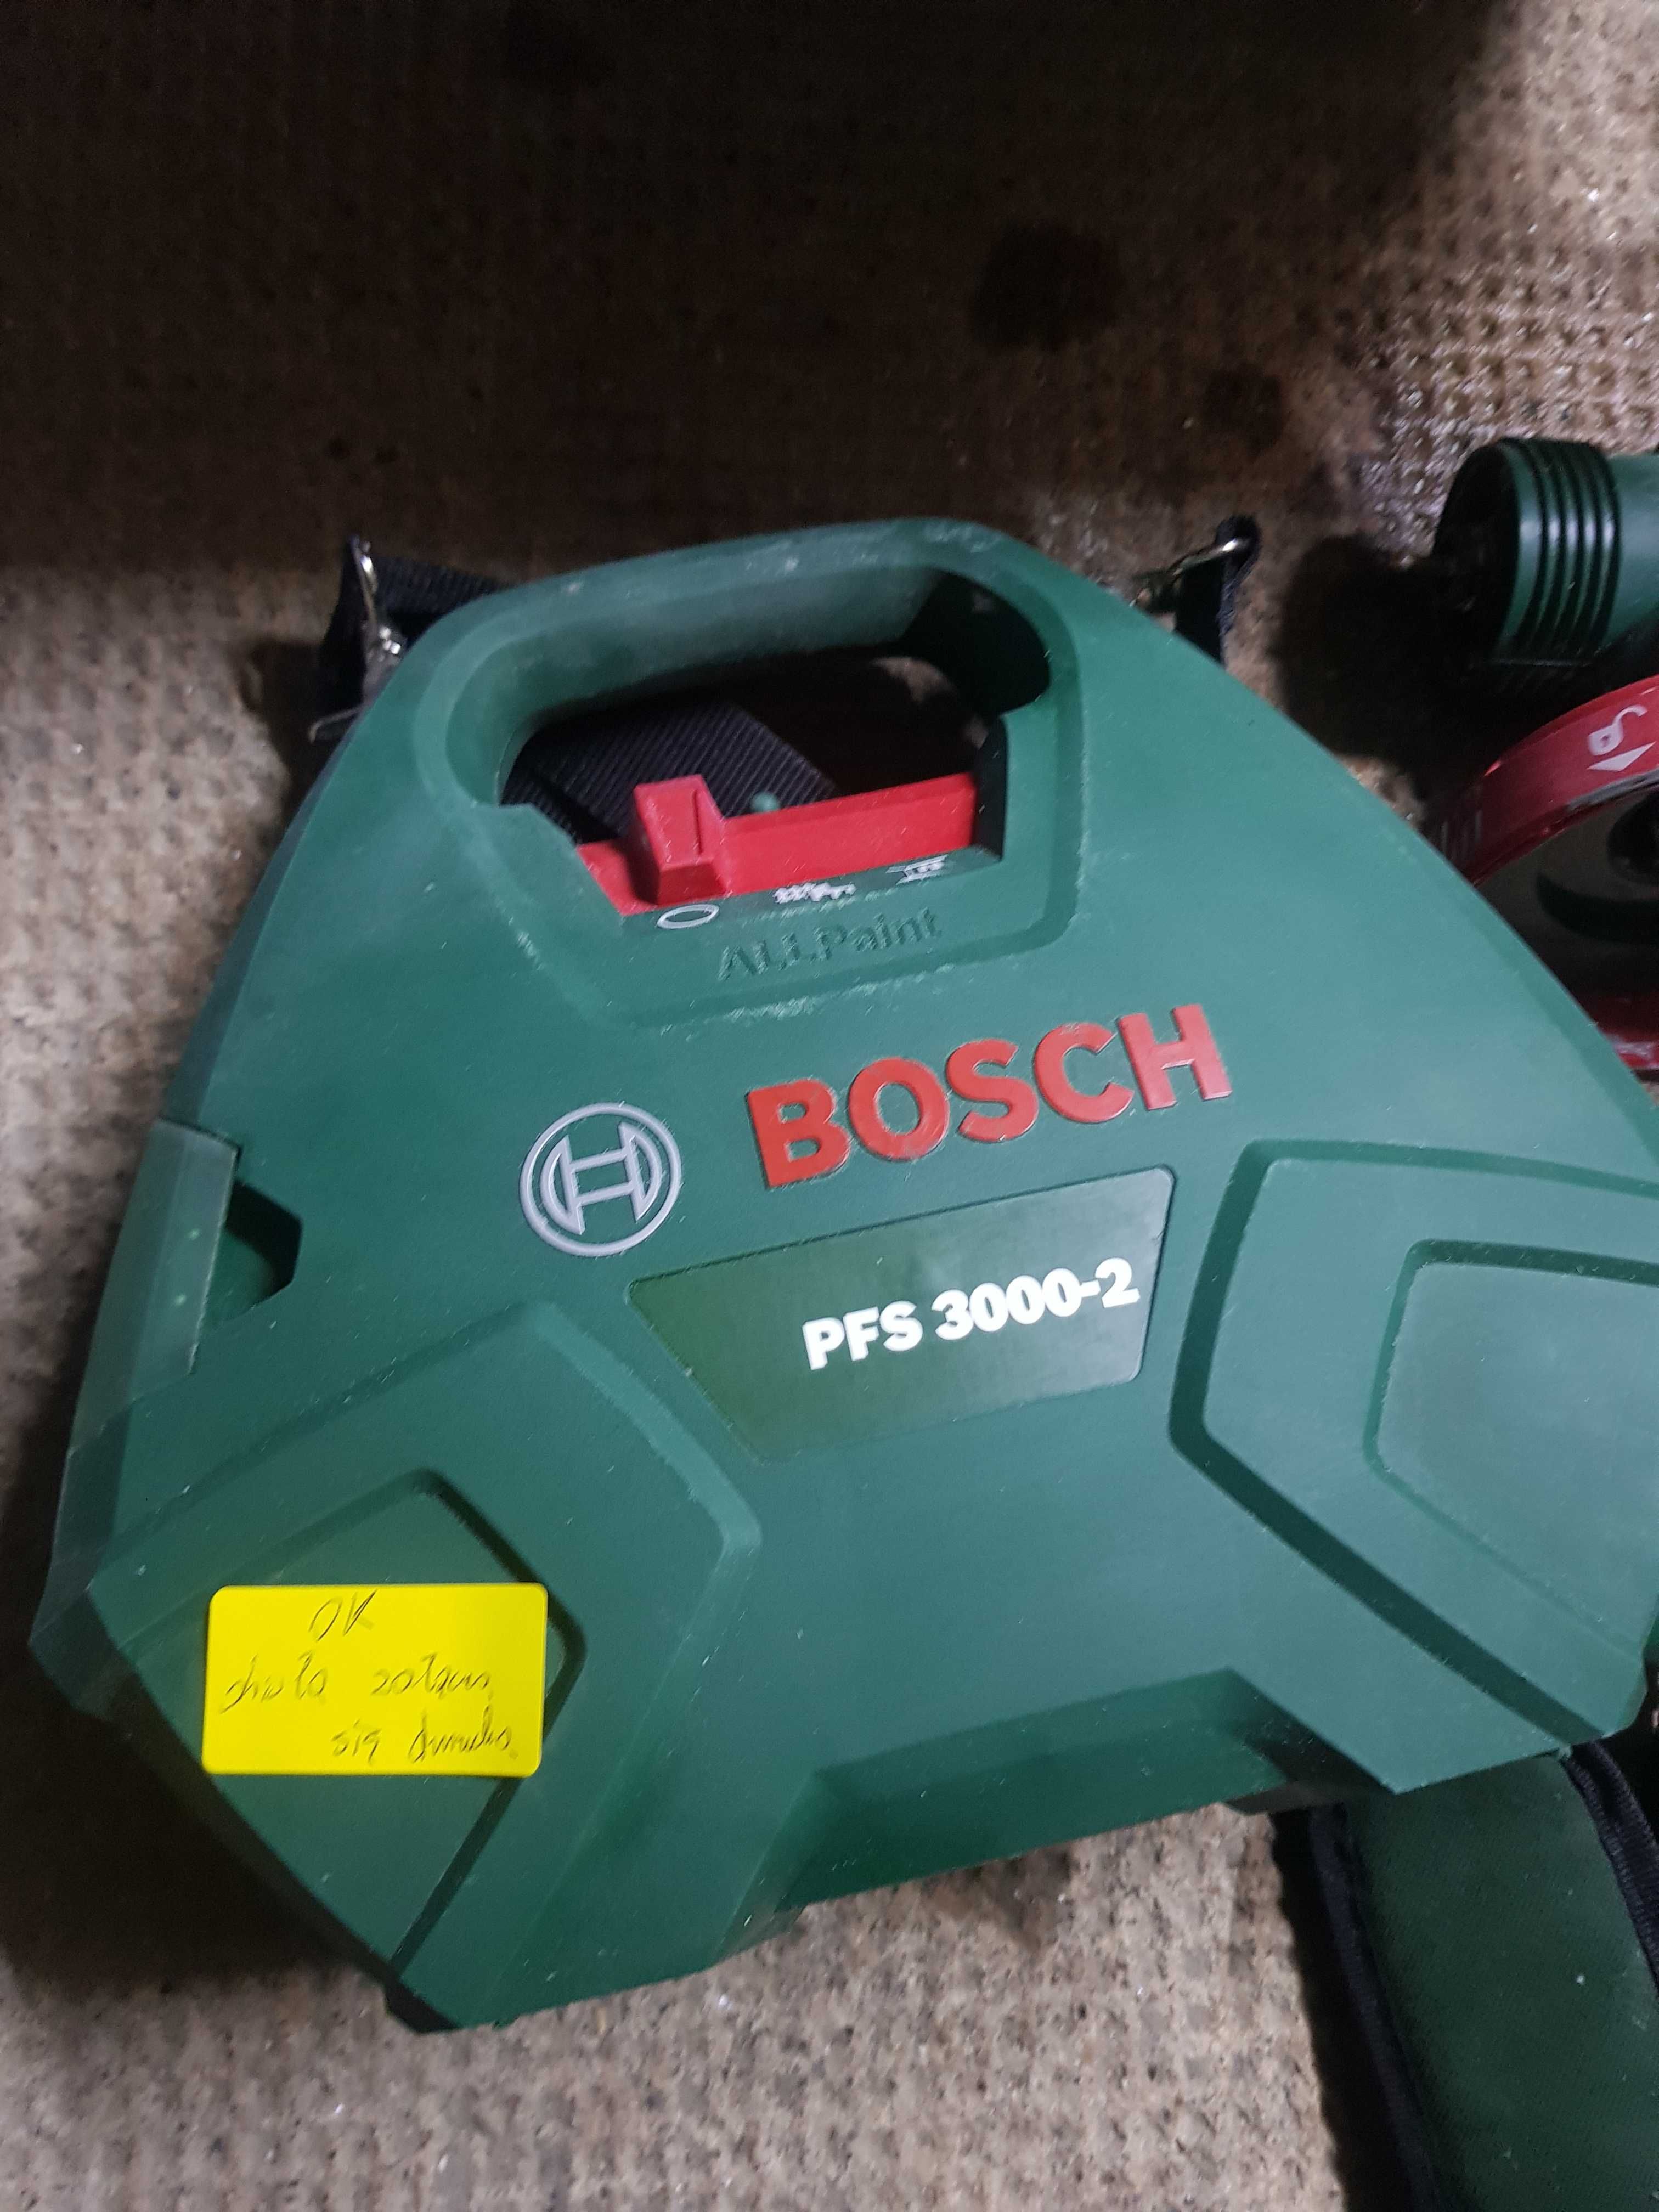 Pistolet malarski Bosch 650 W  PFS 3000-2 ALLPLAINT do malowania